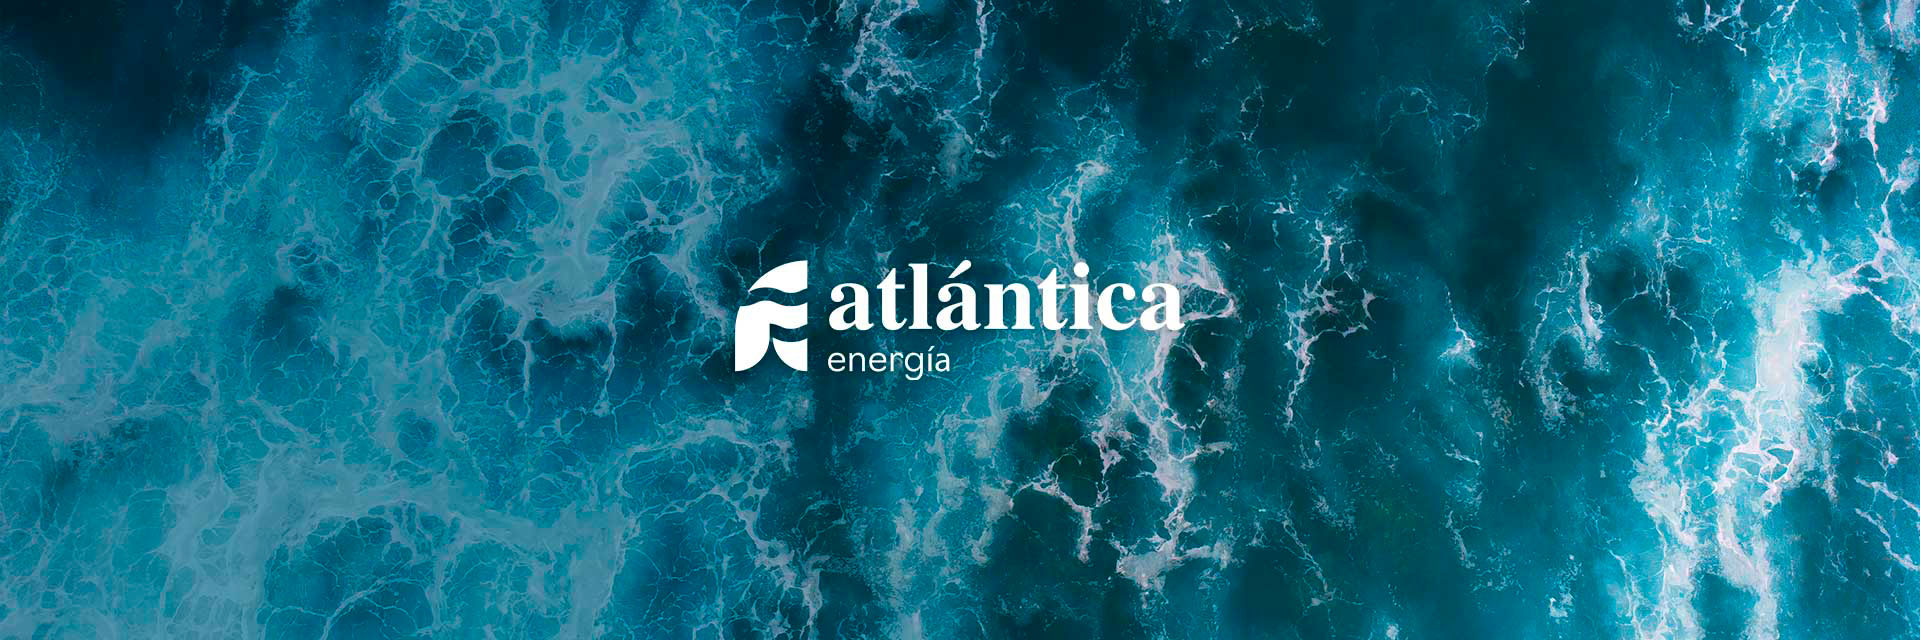 imagen corporativa Atlántica Energía, branding